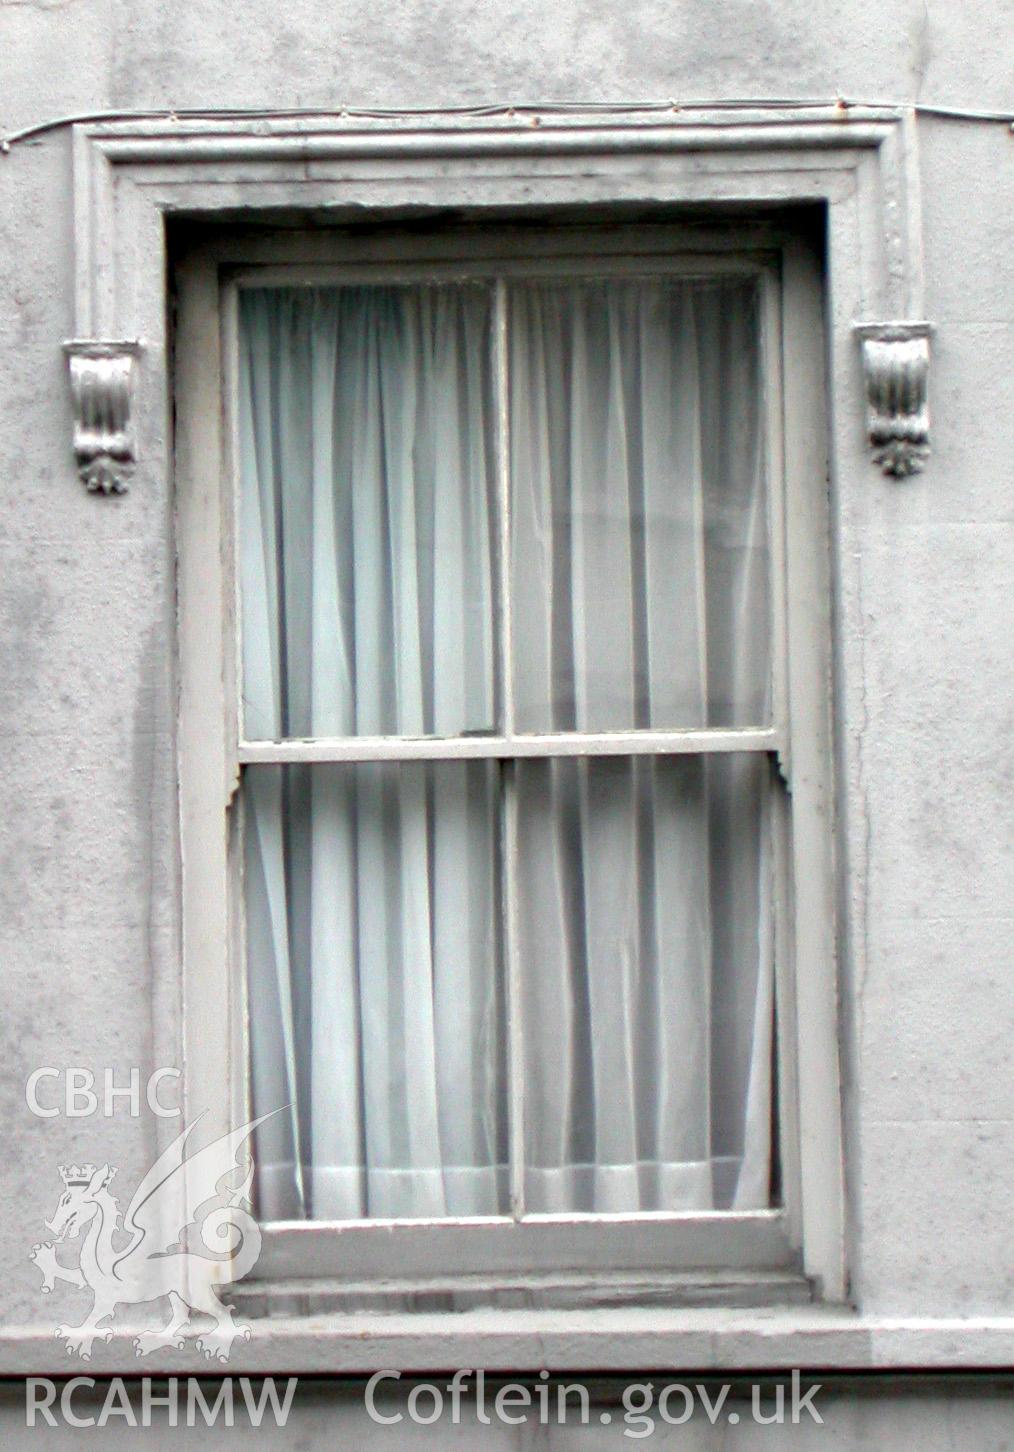 Detail of the ground floor sash window in the front elevation of 44 Bridge Street.